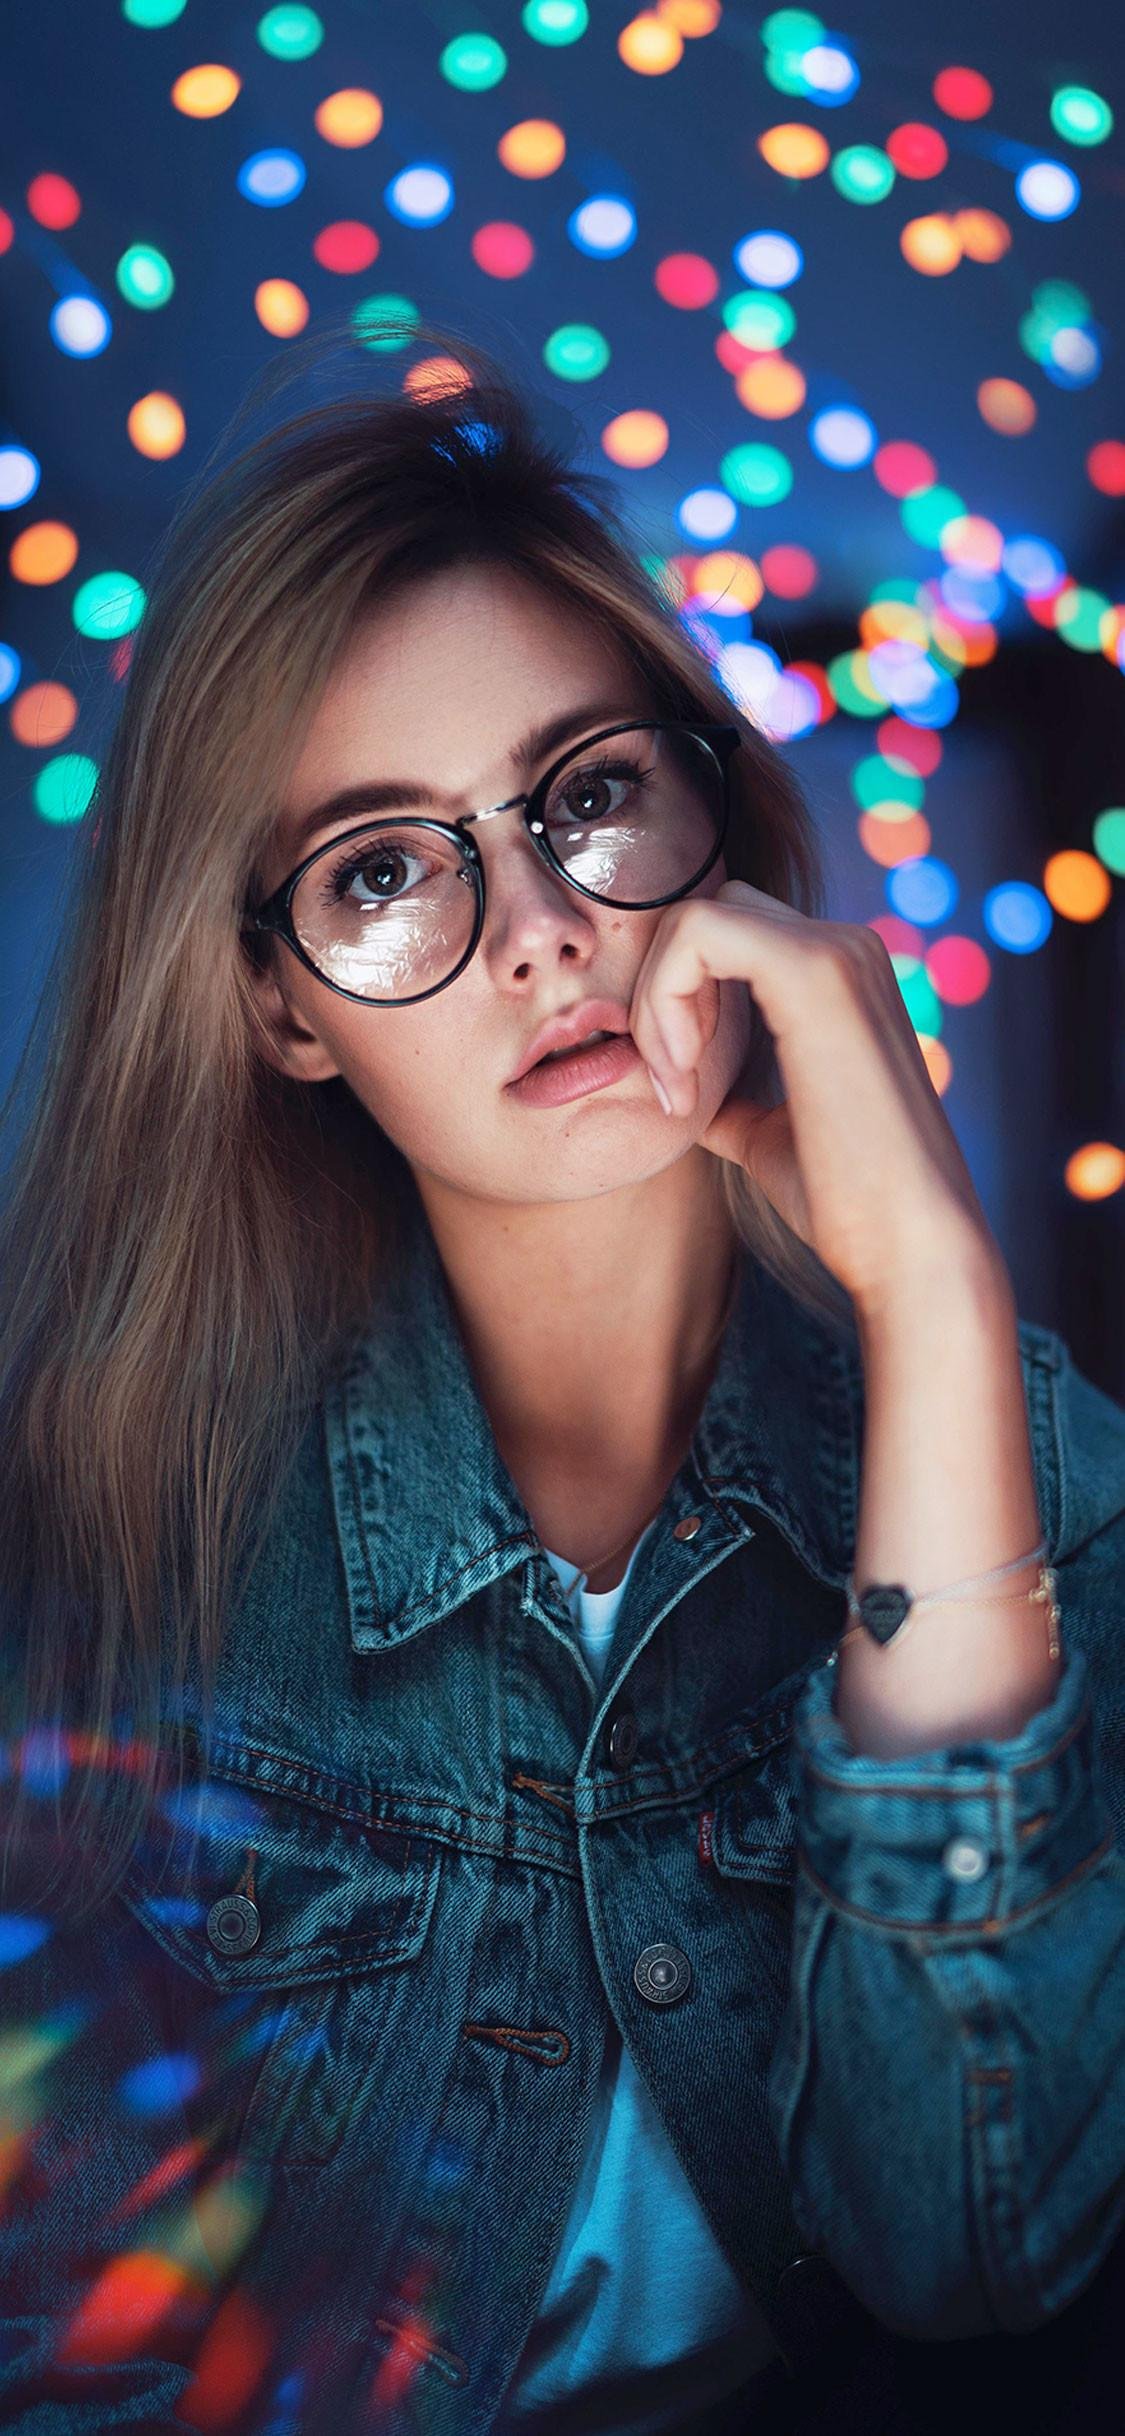 Cute Girl In Glasses